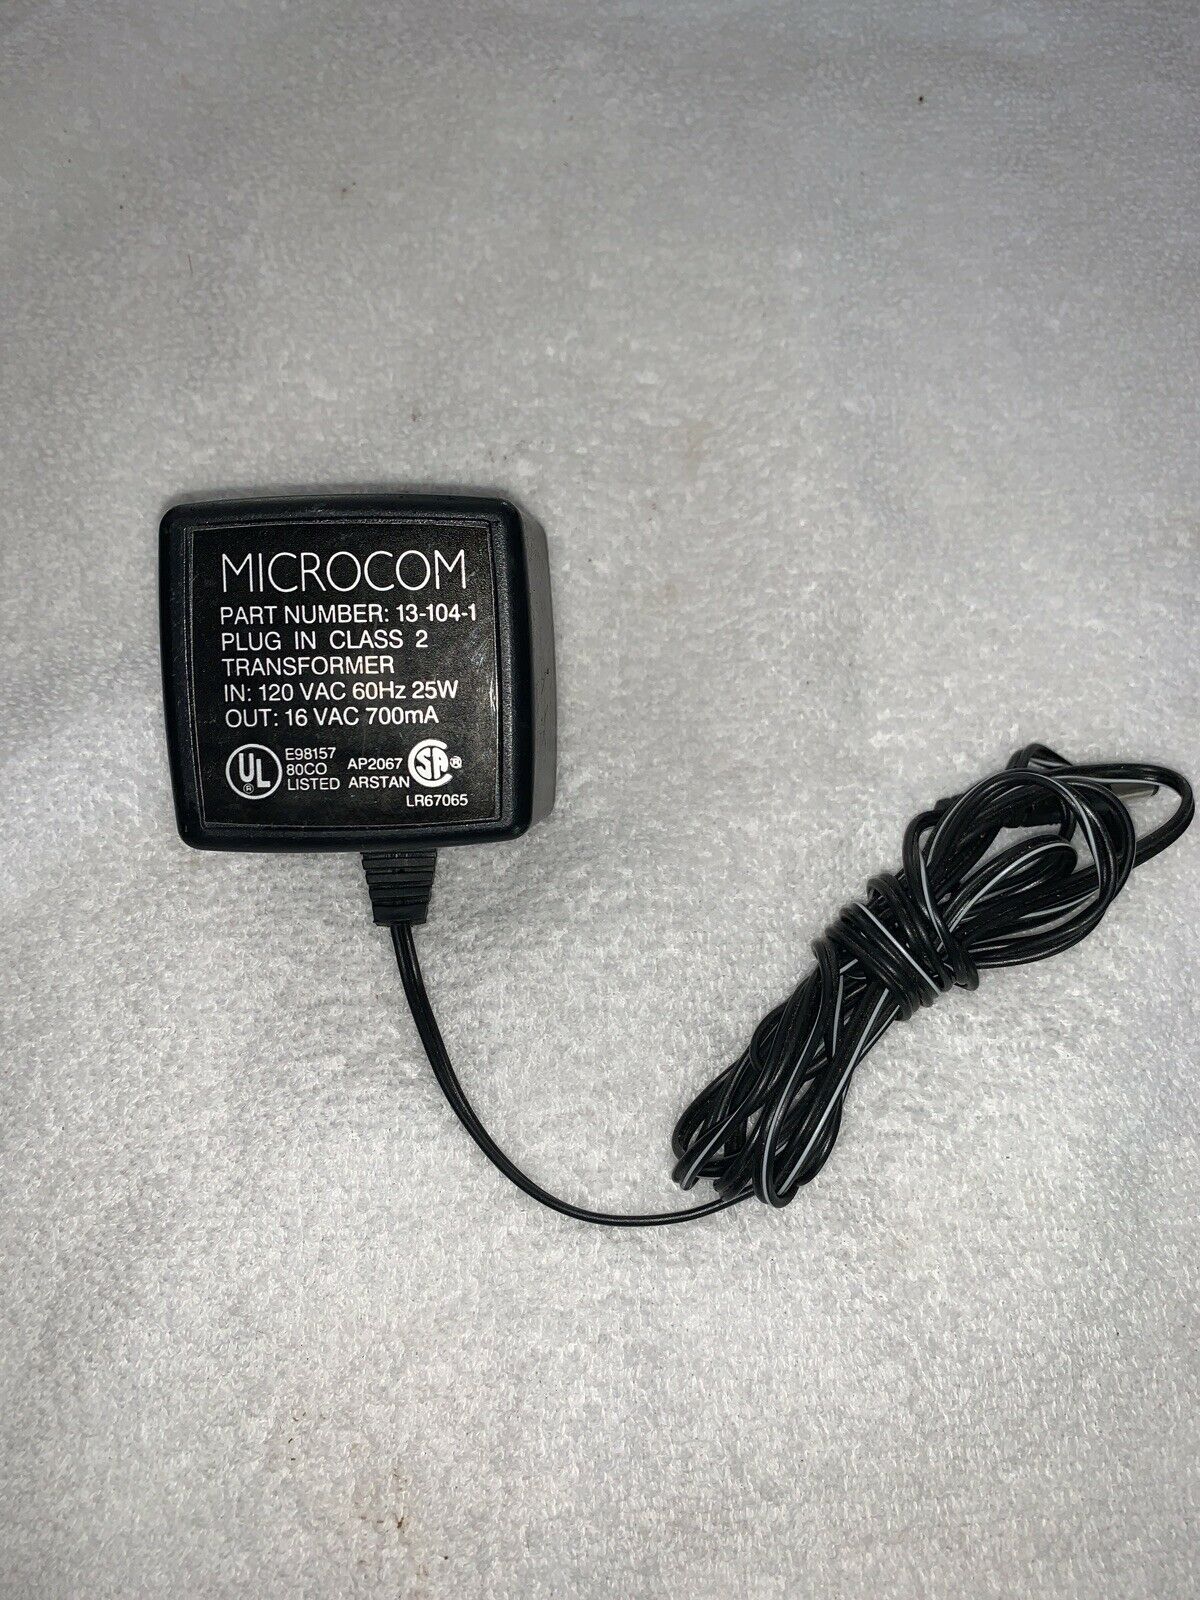 Microcom 13-104-1 Plug-In Class 2 Transformer AC Adapter Output 19V AC 600mA Conn